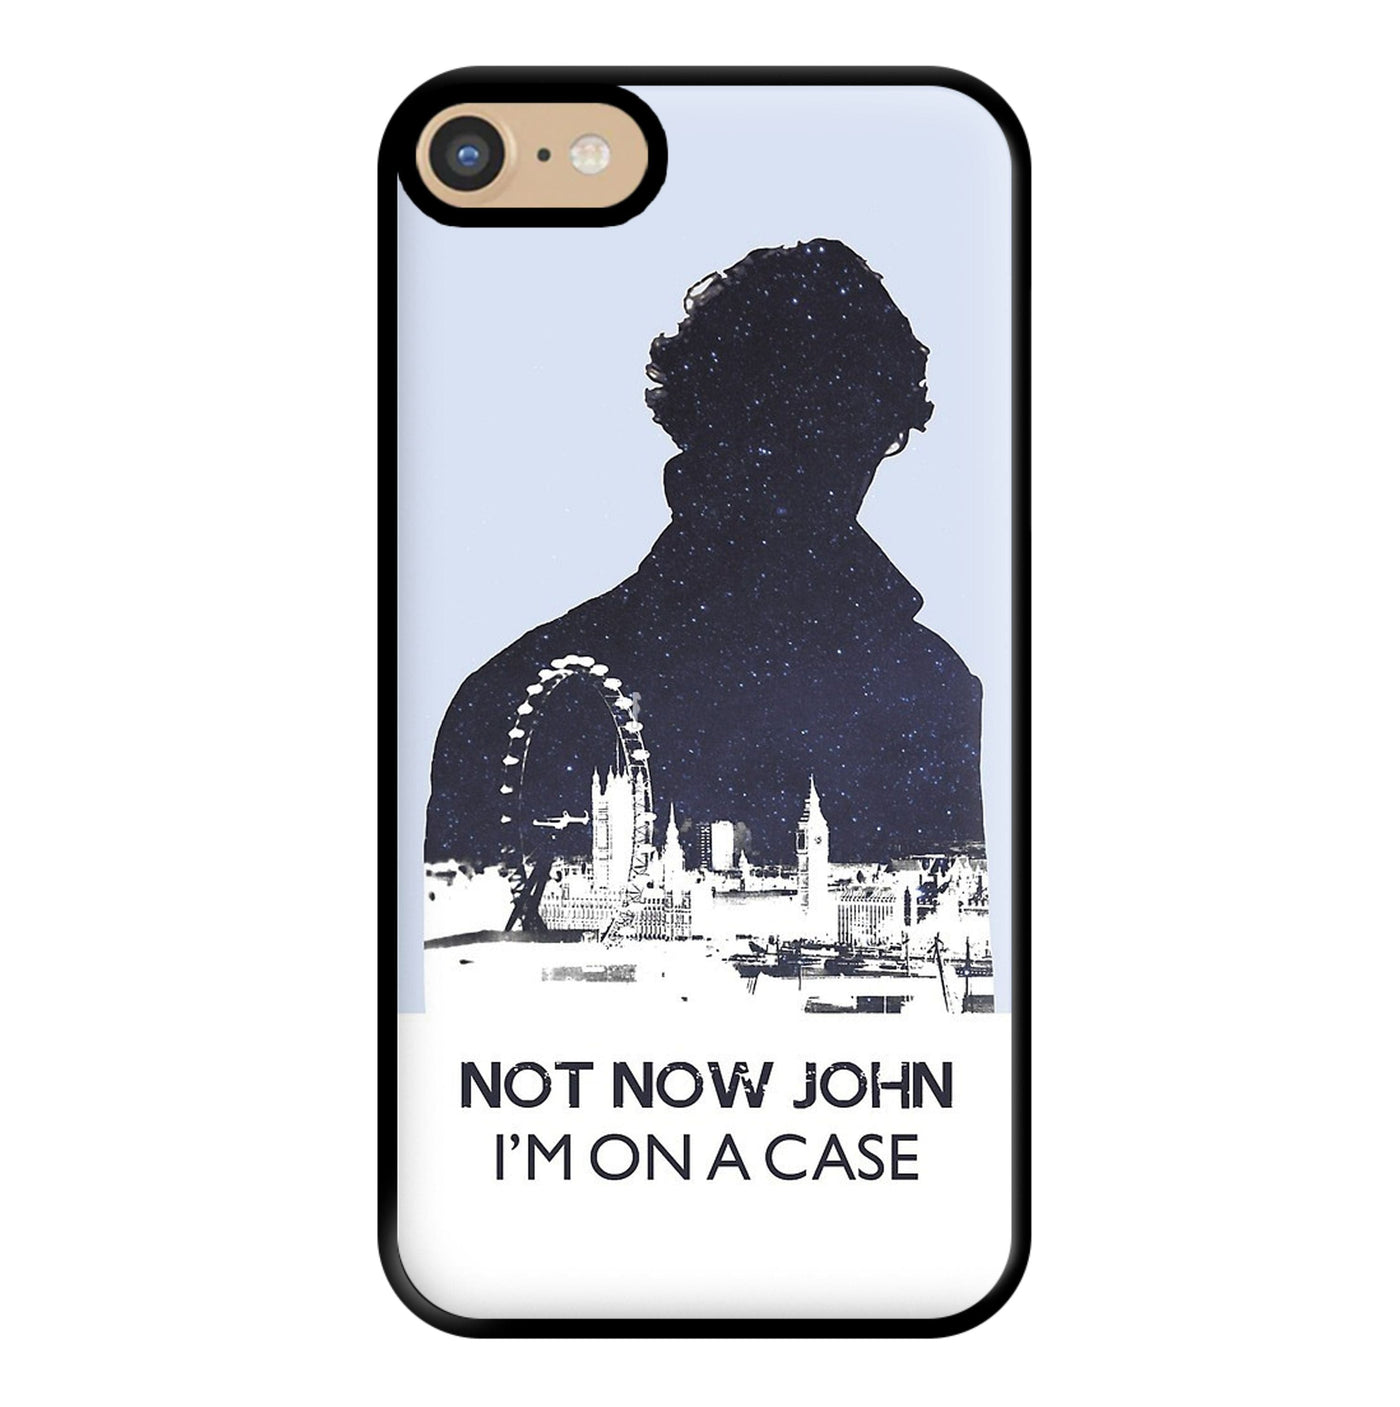 Now Now John, I'm On A Case - Sherlock Phone Case